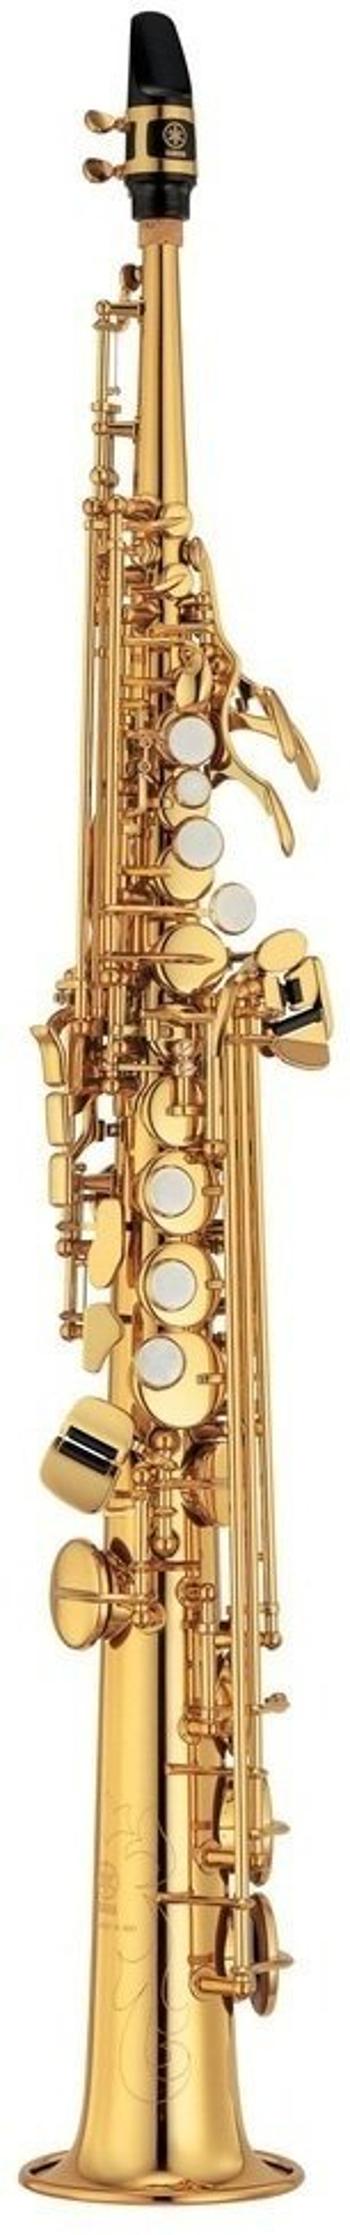 Yamaha YSS 475 II Sopránový Saxofon